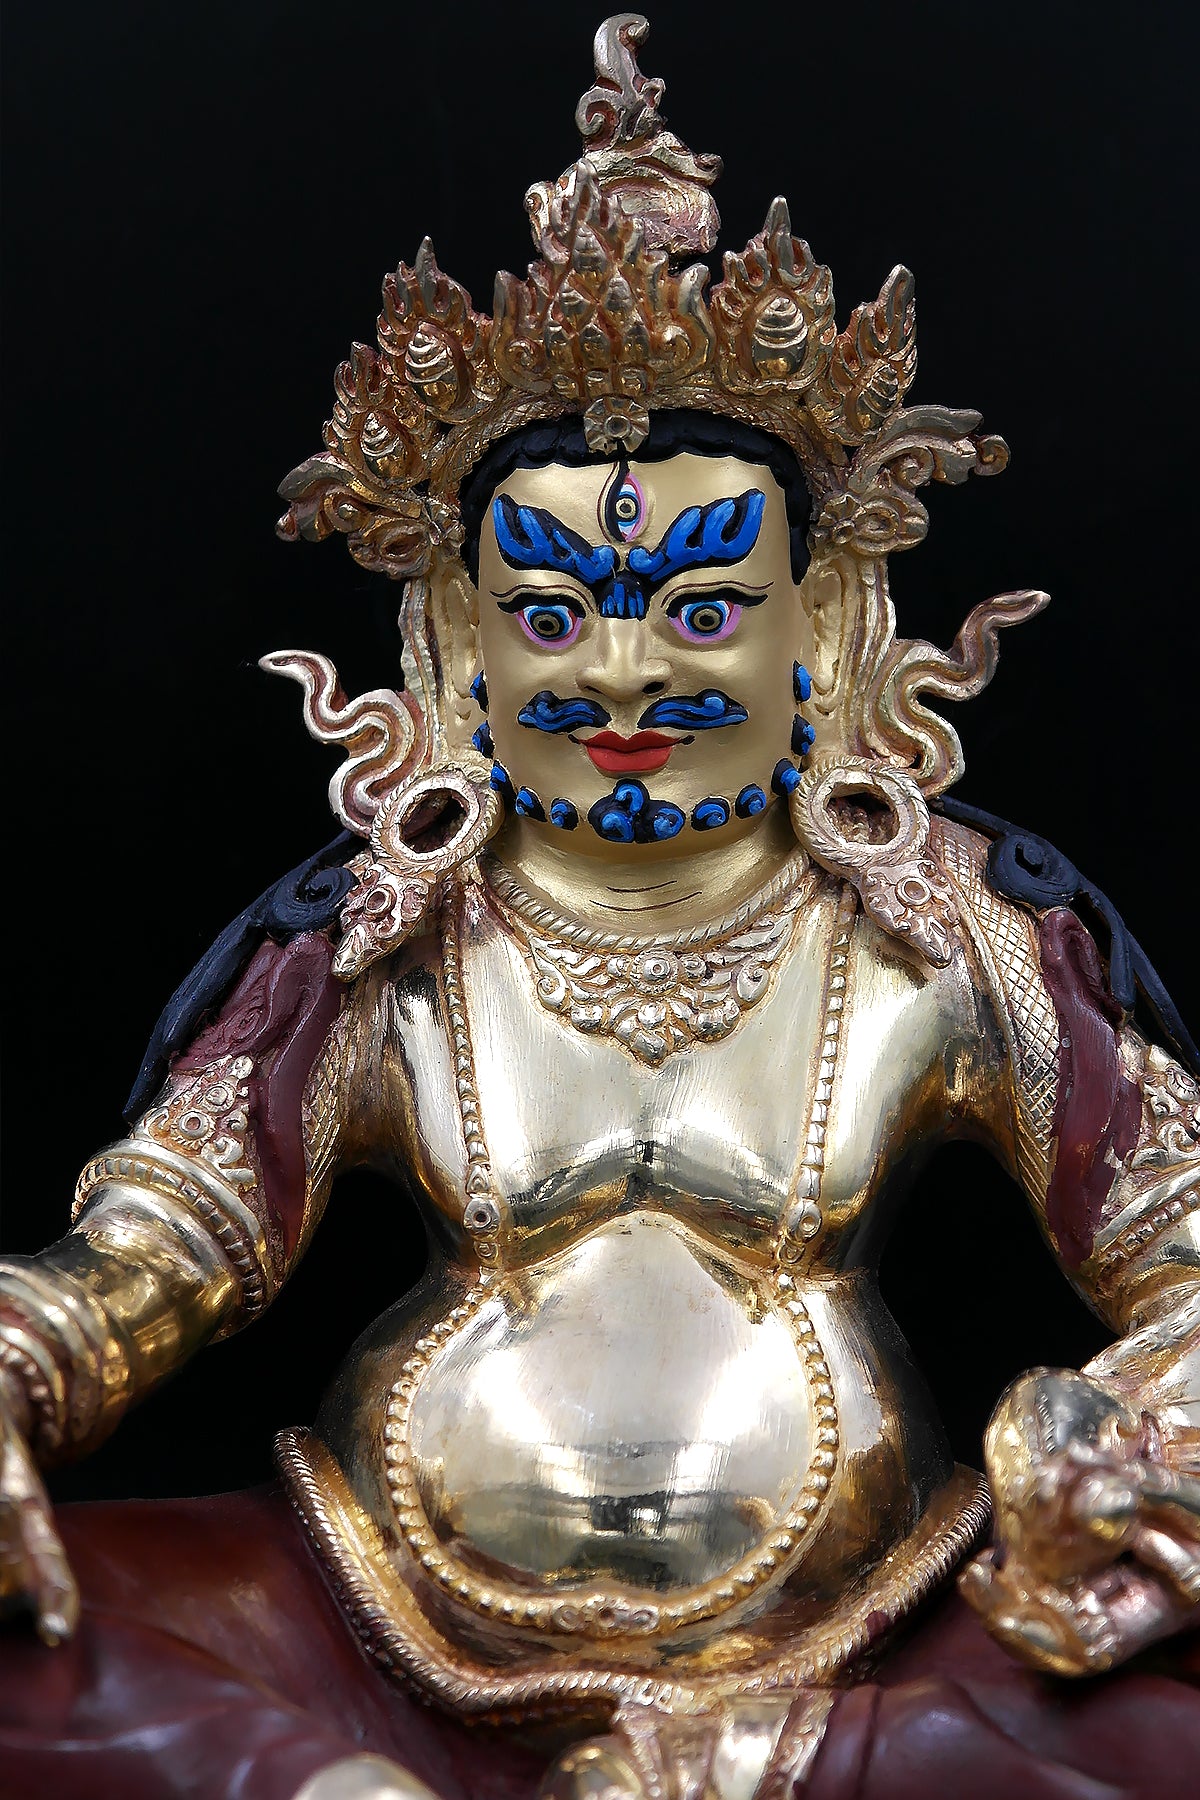 Partly Gold Plated Zambala Statue, Handmade Kuber Statue in Nepal 9"